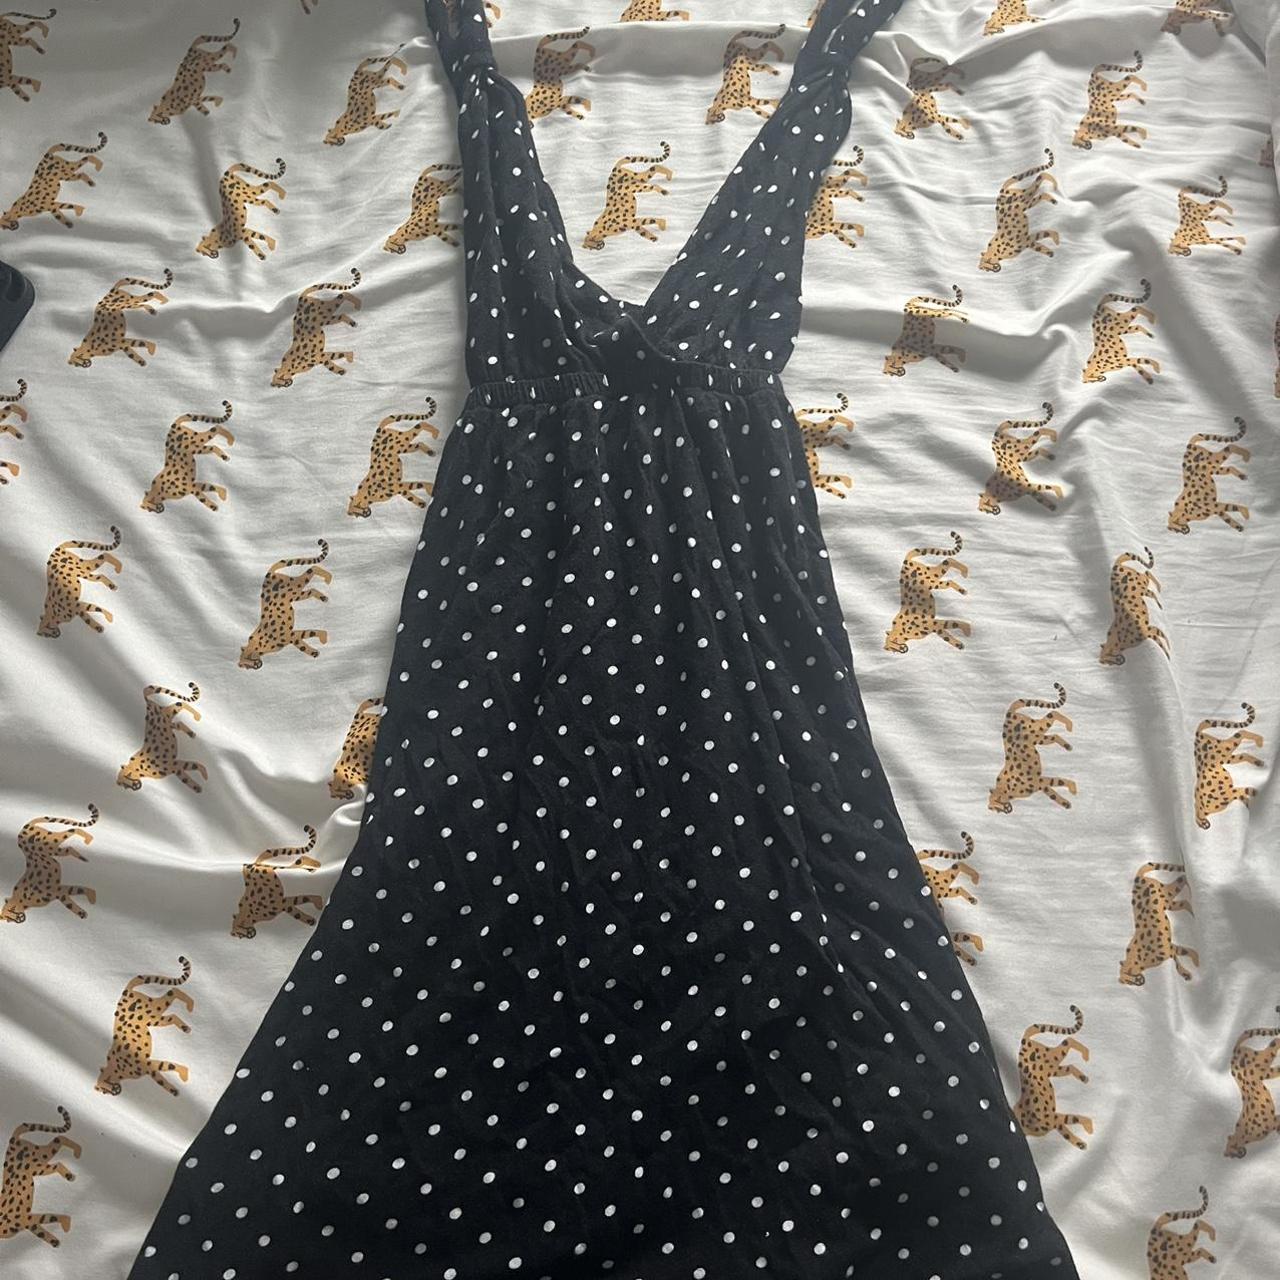 vintage polka dot dress (V-Cut) no tags fits a s/m - Depop